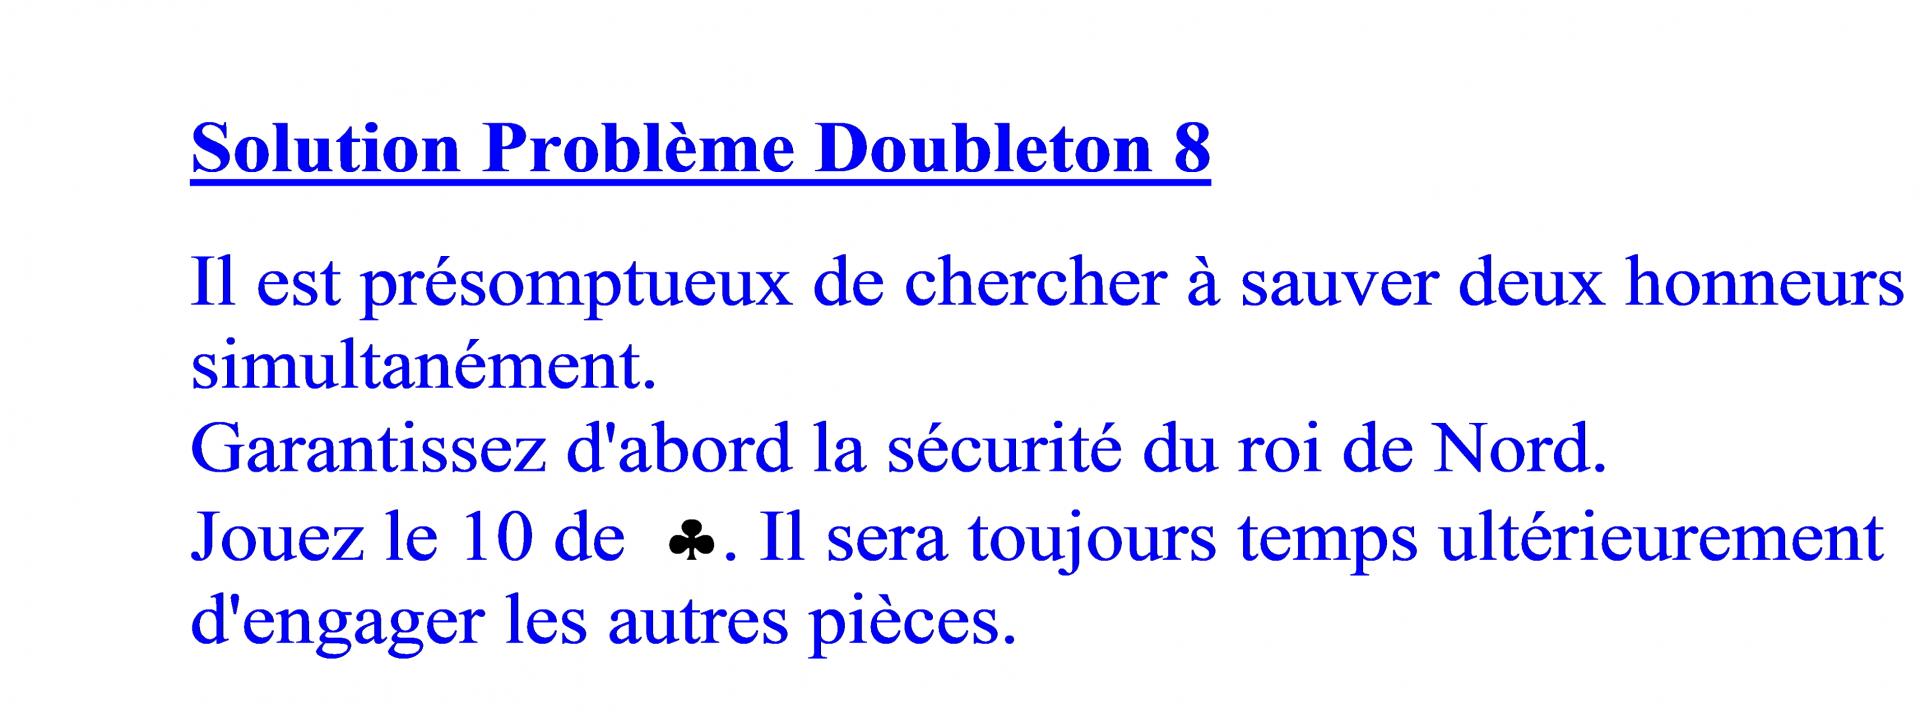 Doubleton 8 r